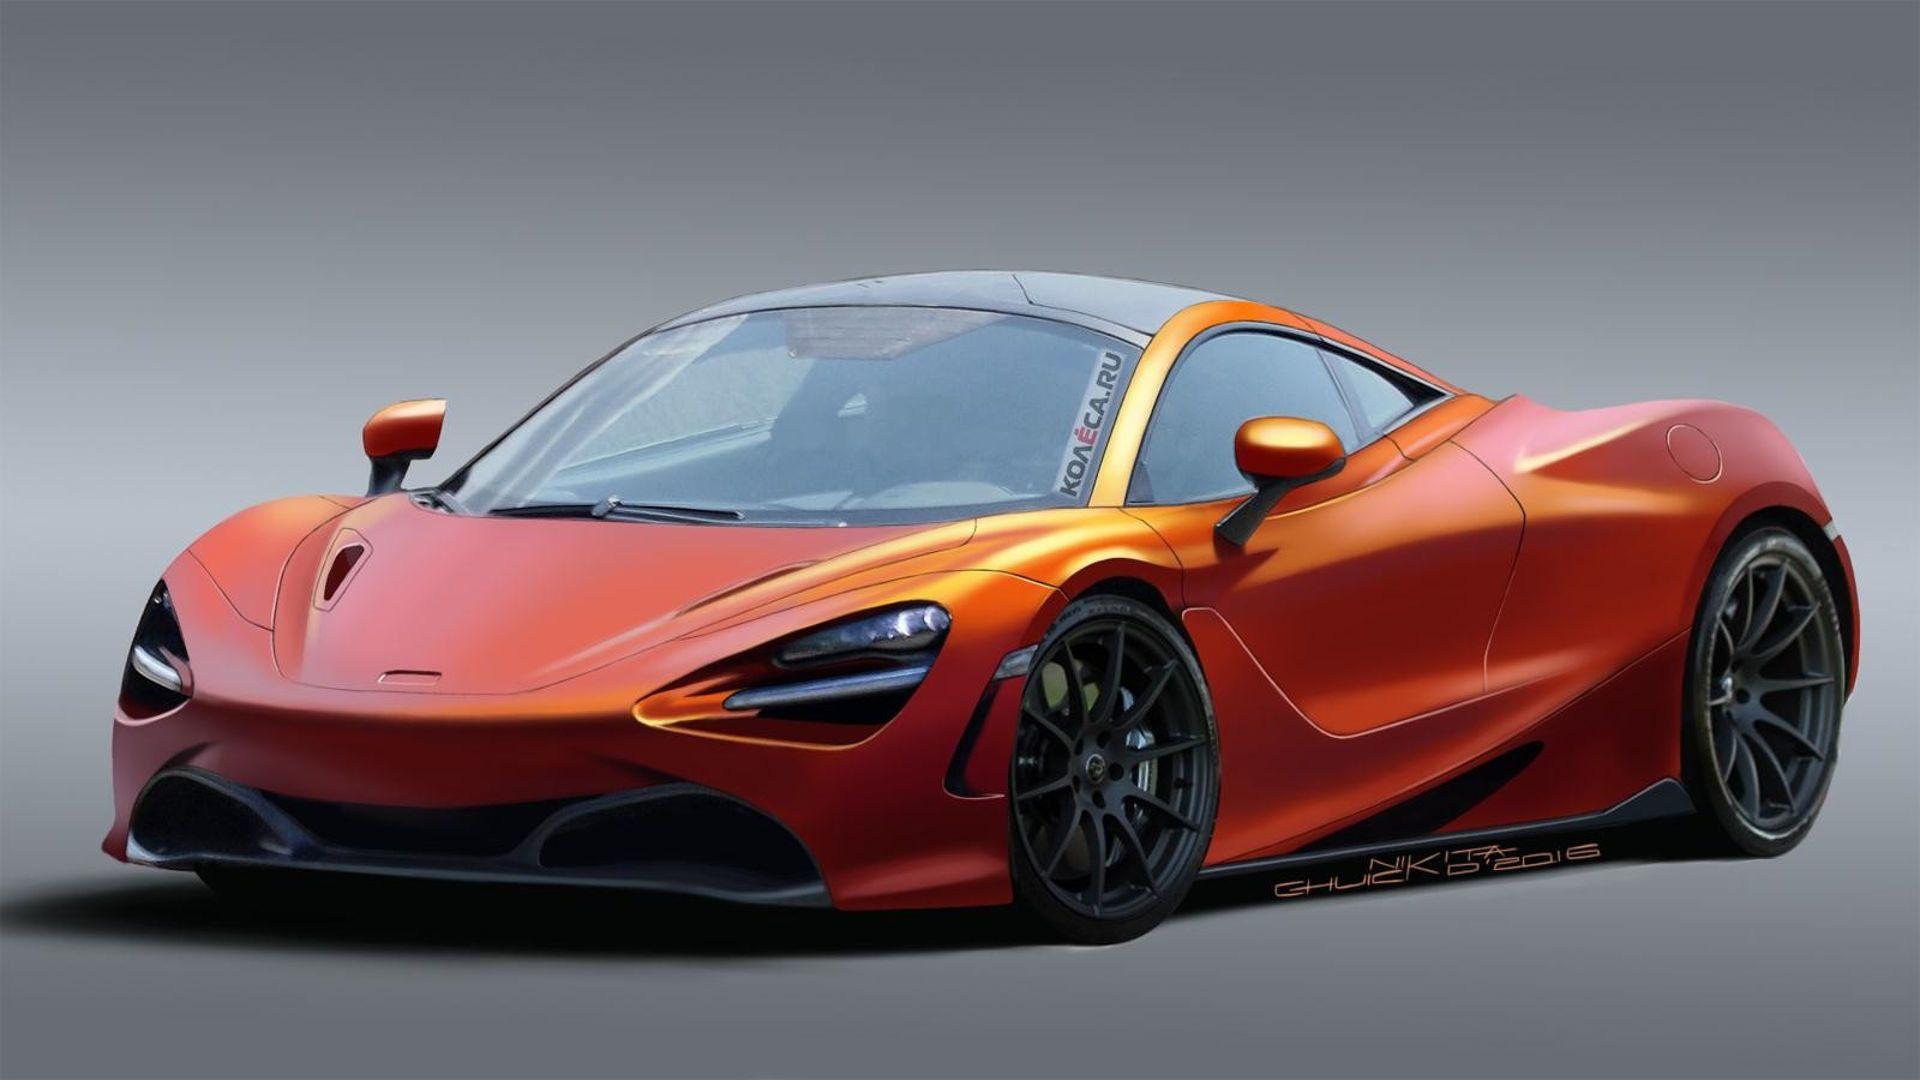 McLaren 720S rendering looks production ready